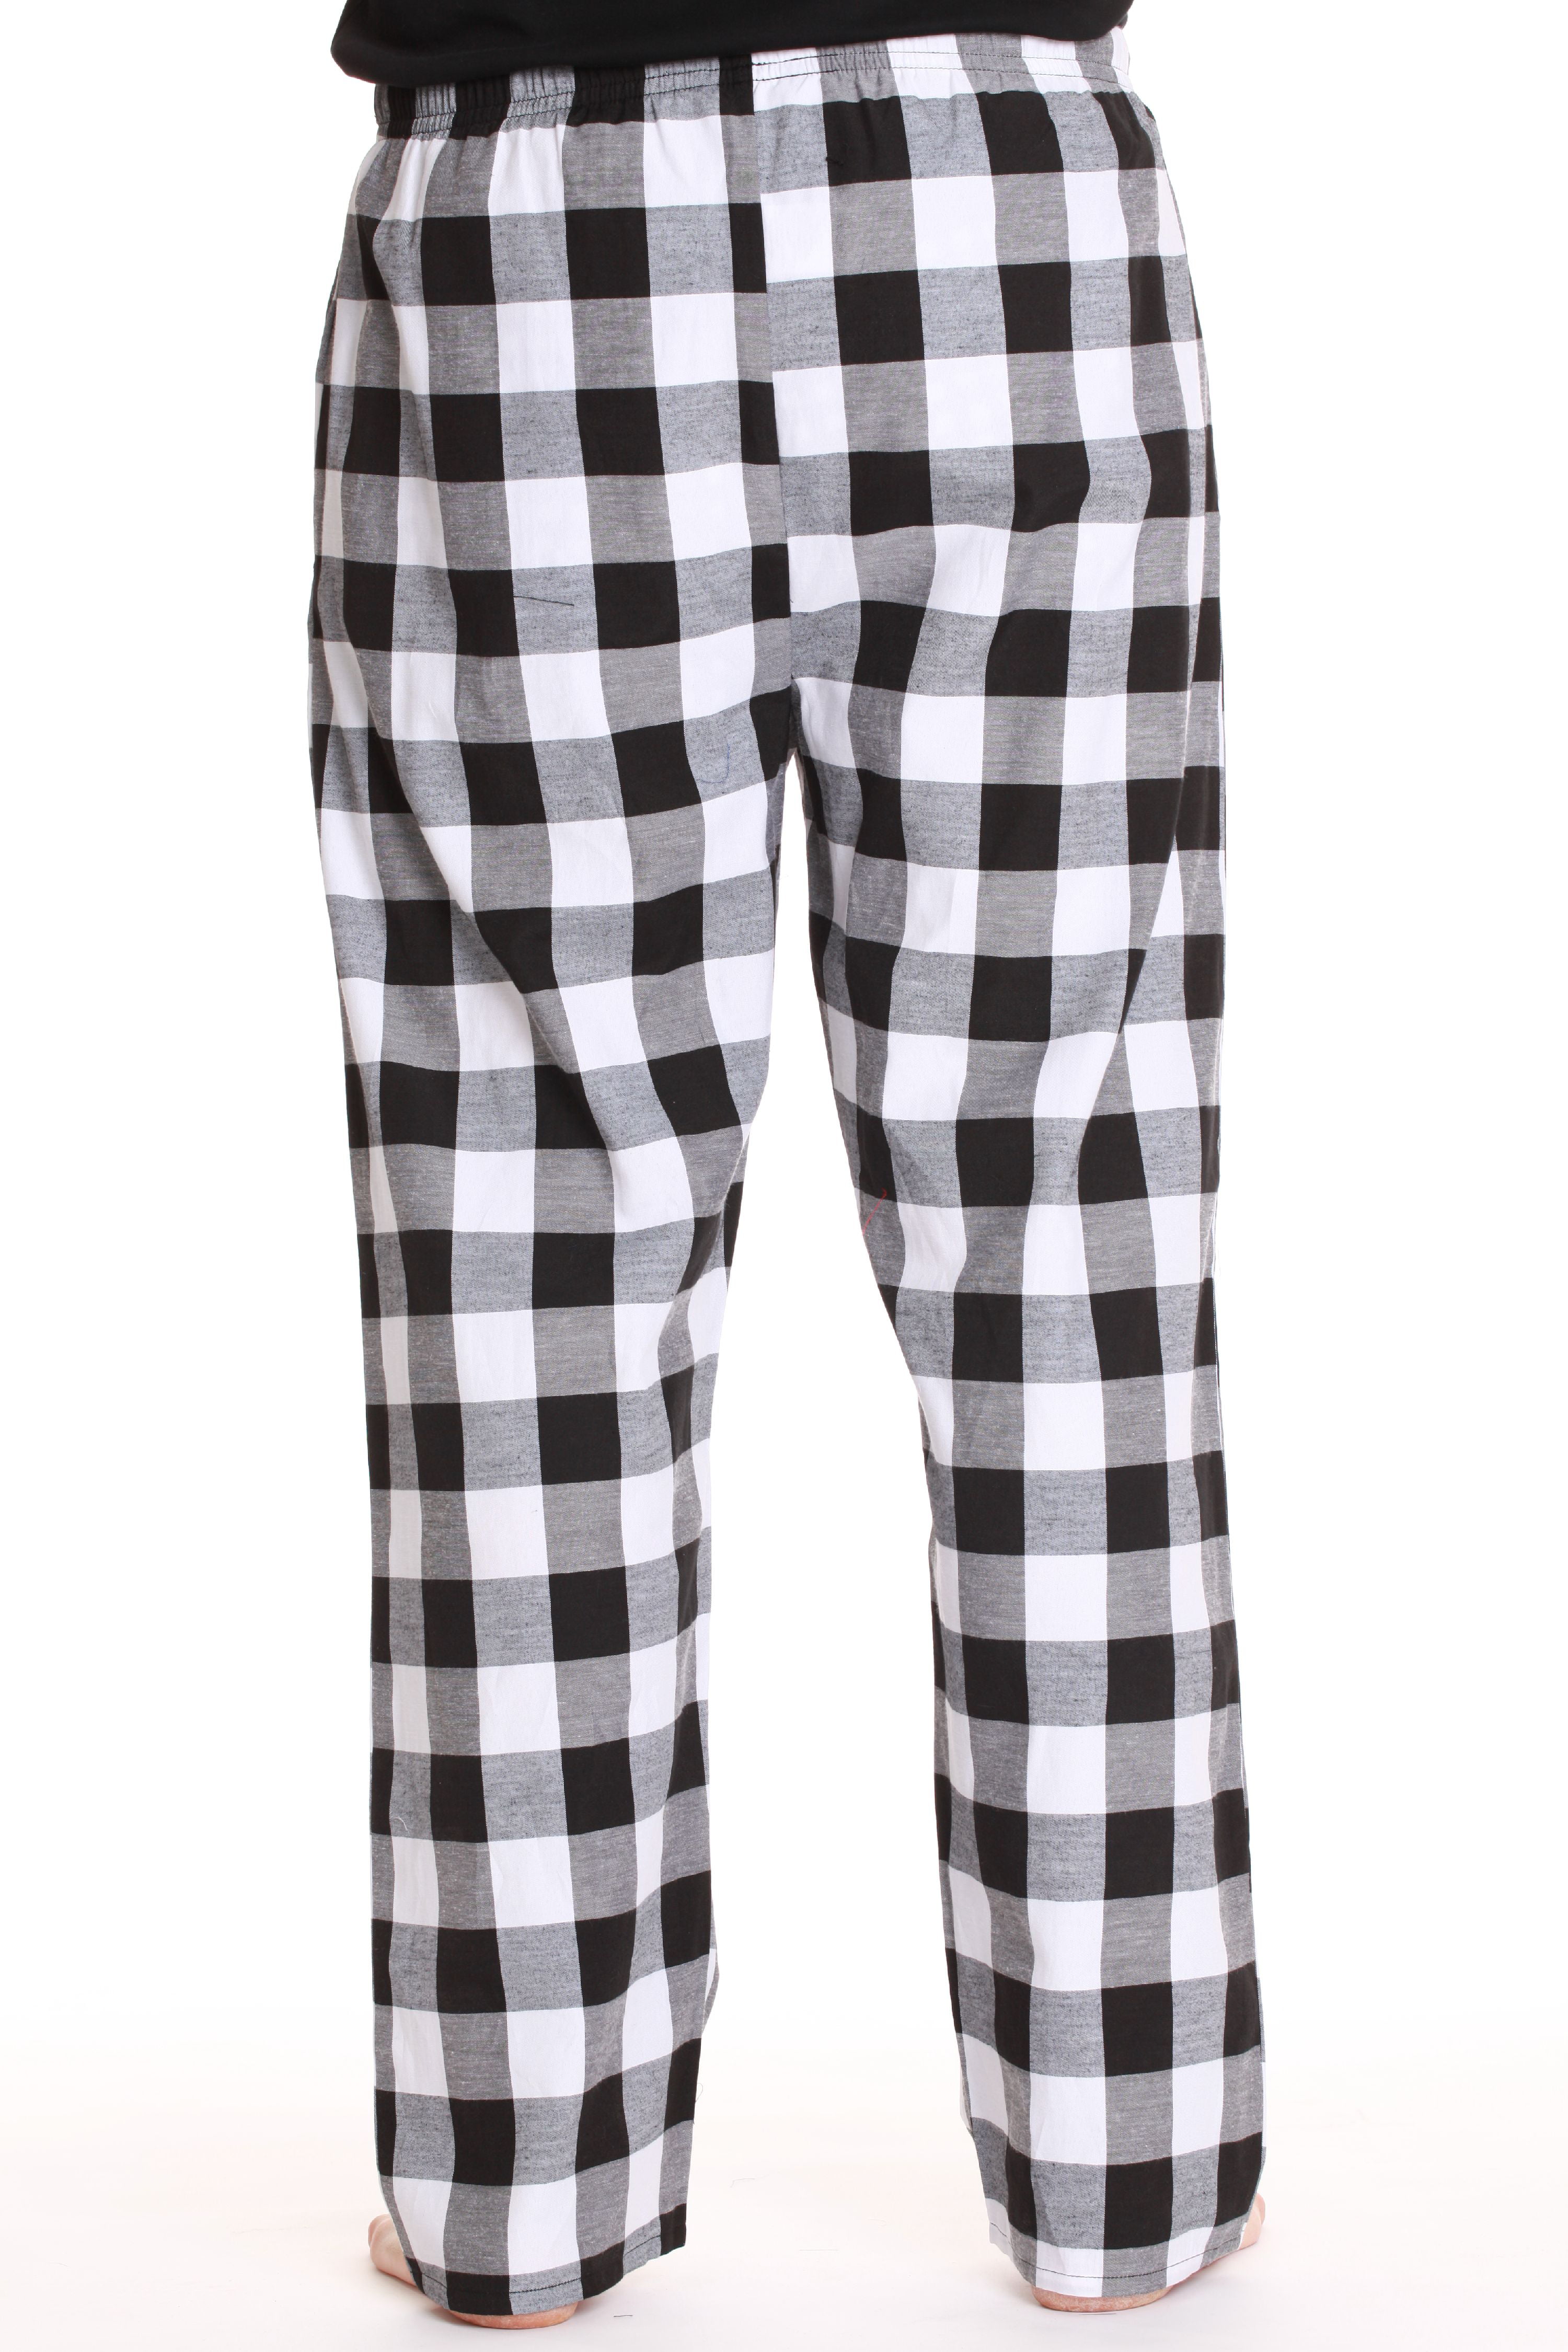 black and white check pants mens